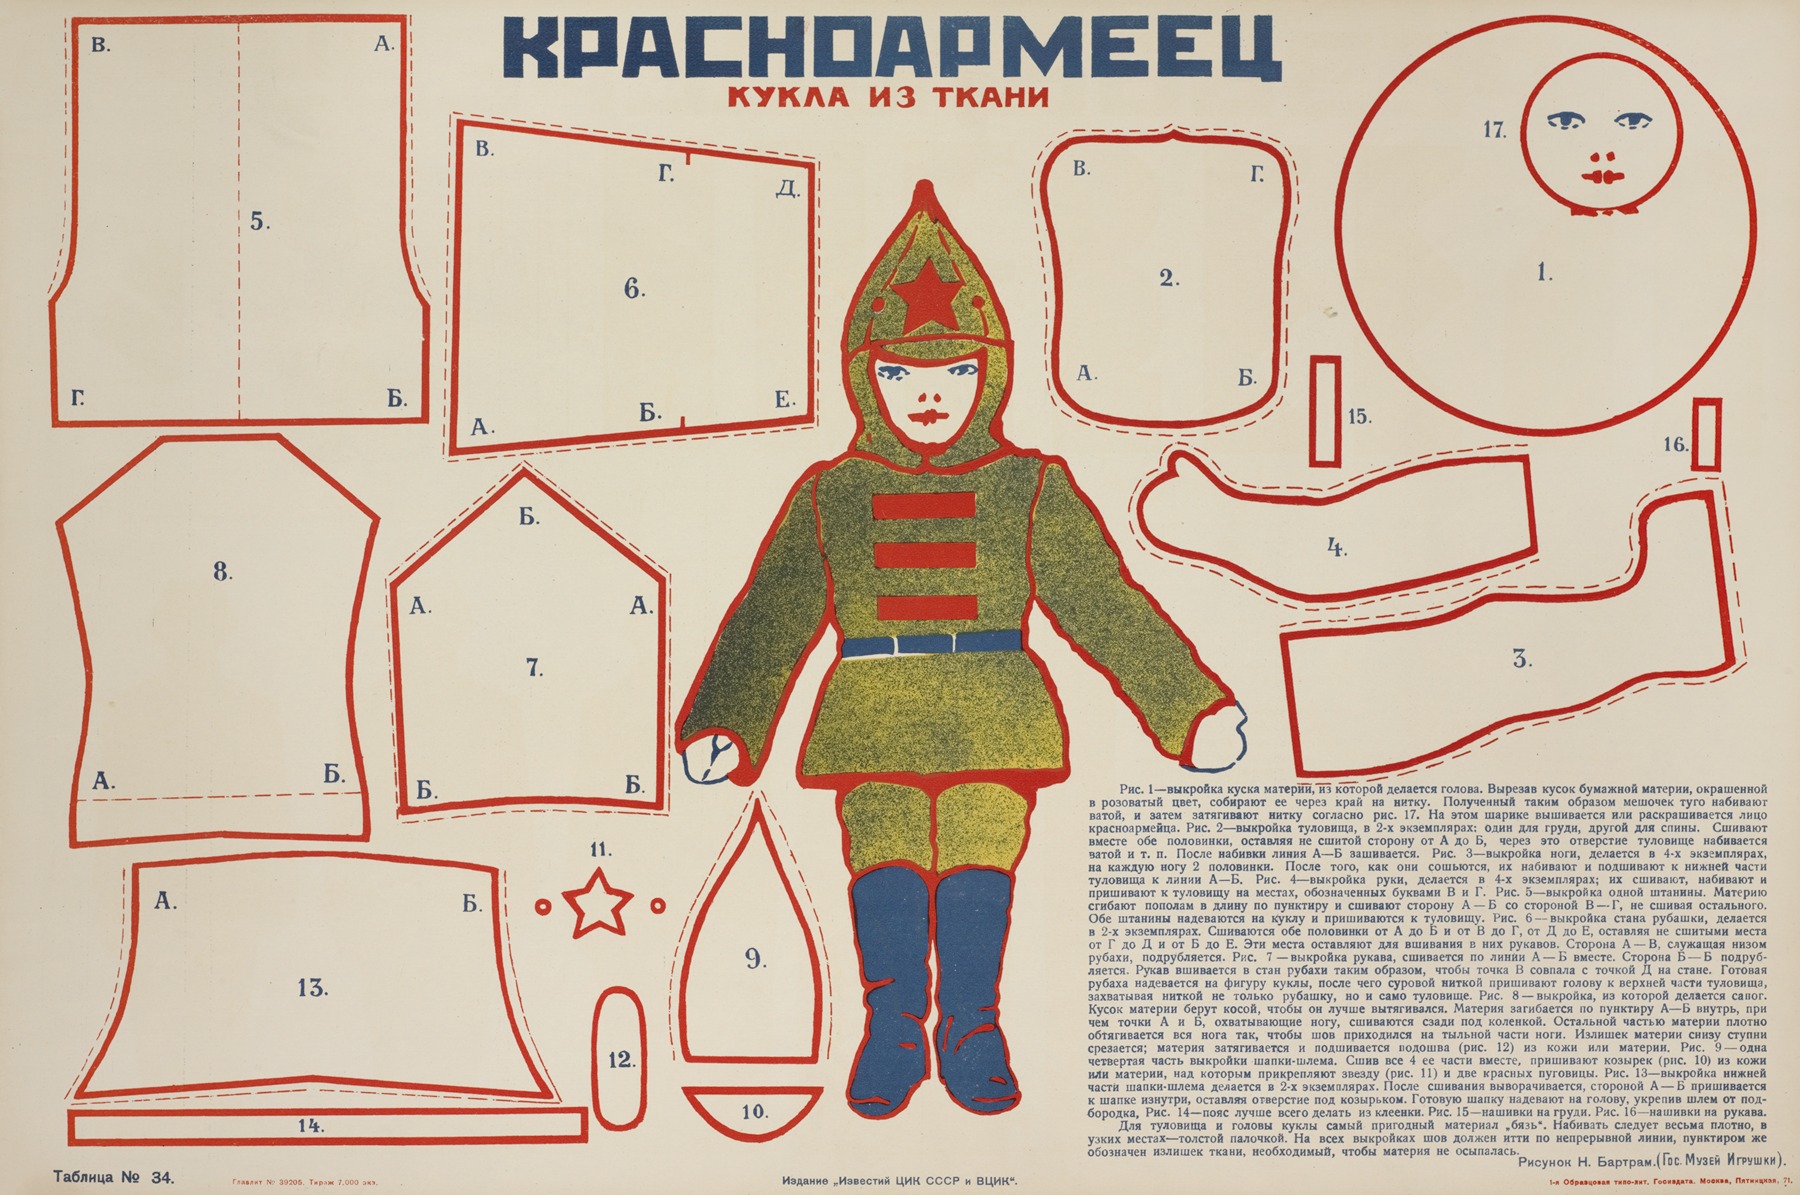 I͡Akov Aleksandrovich Tugendkholʹd - Krasnoarmeets; Kykla iz tkani (Ris. Bartram), Tablitsa No. 34